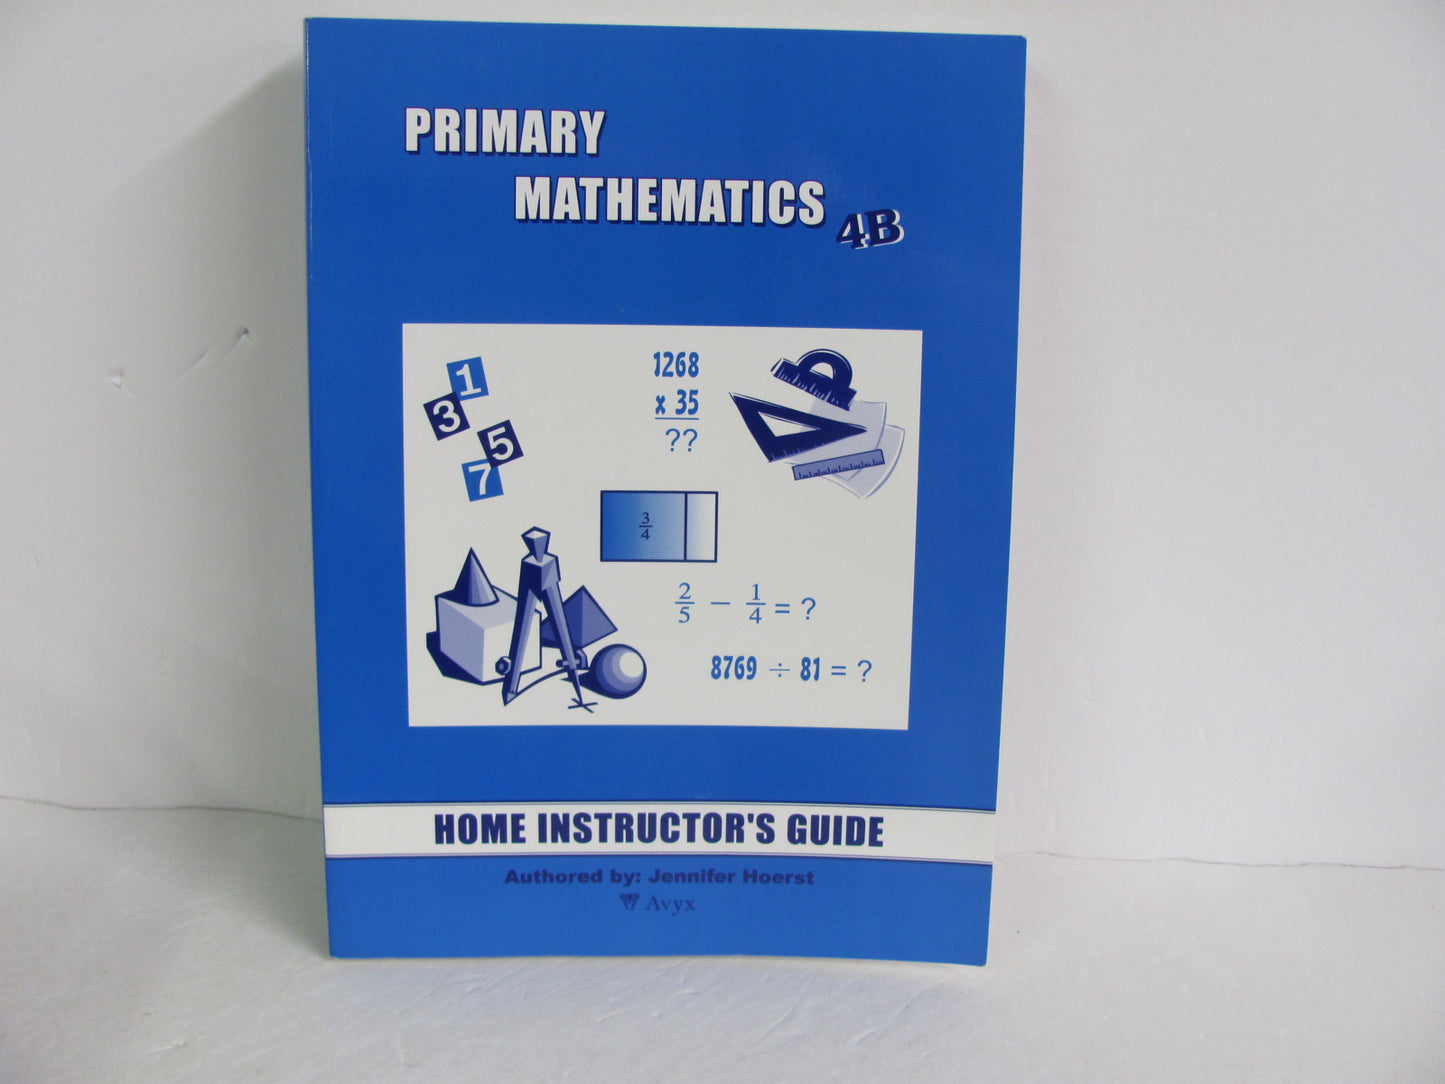 Primary Mathematics Singapore Teacher Guide  Pre-Owned Mathematics Textbooks